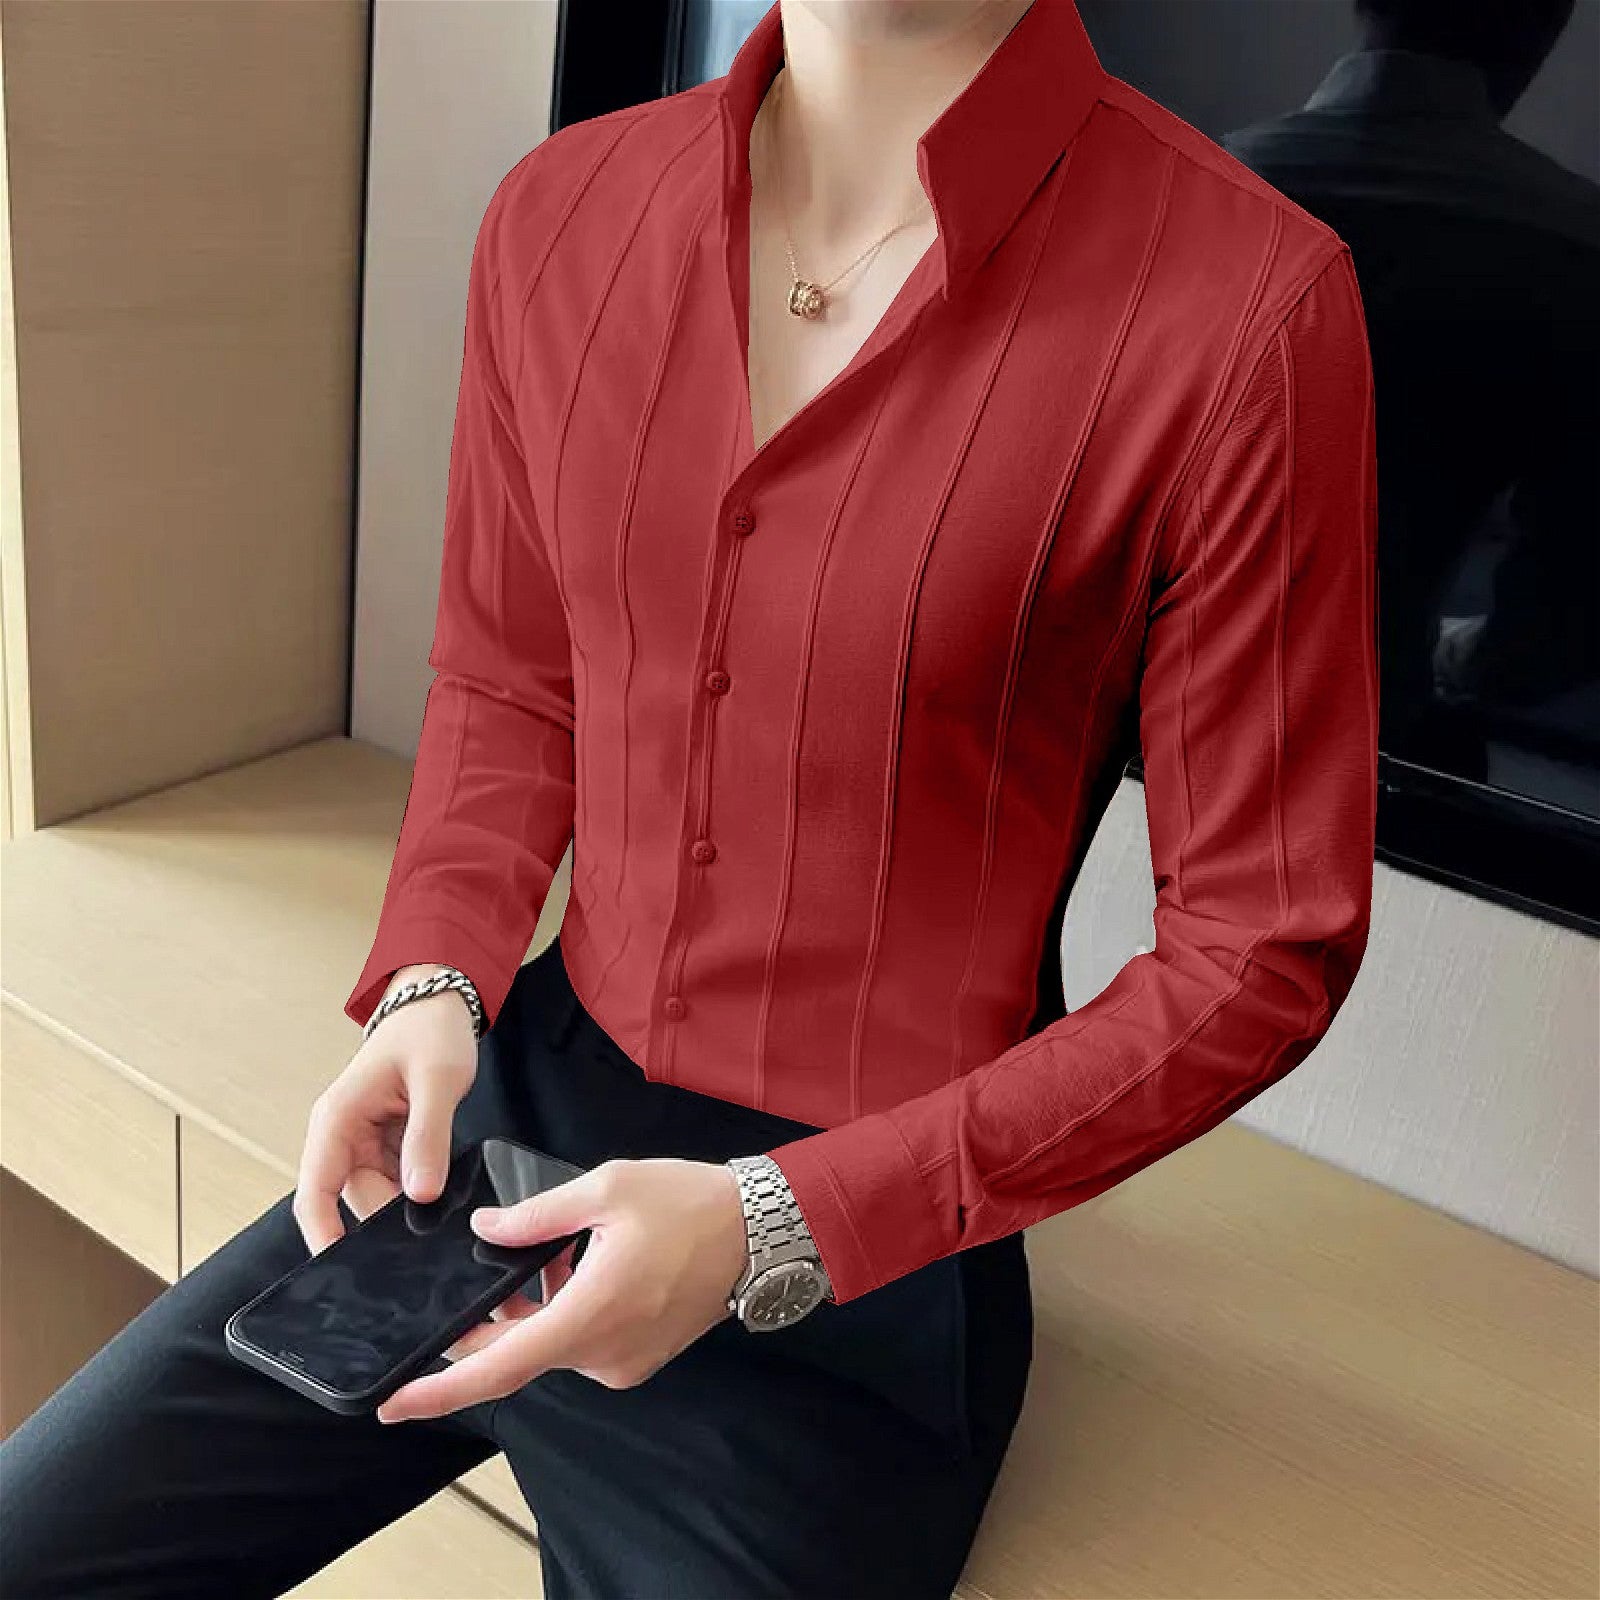 Assemblage Red Striped Premium Shirt